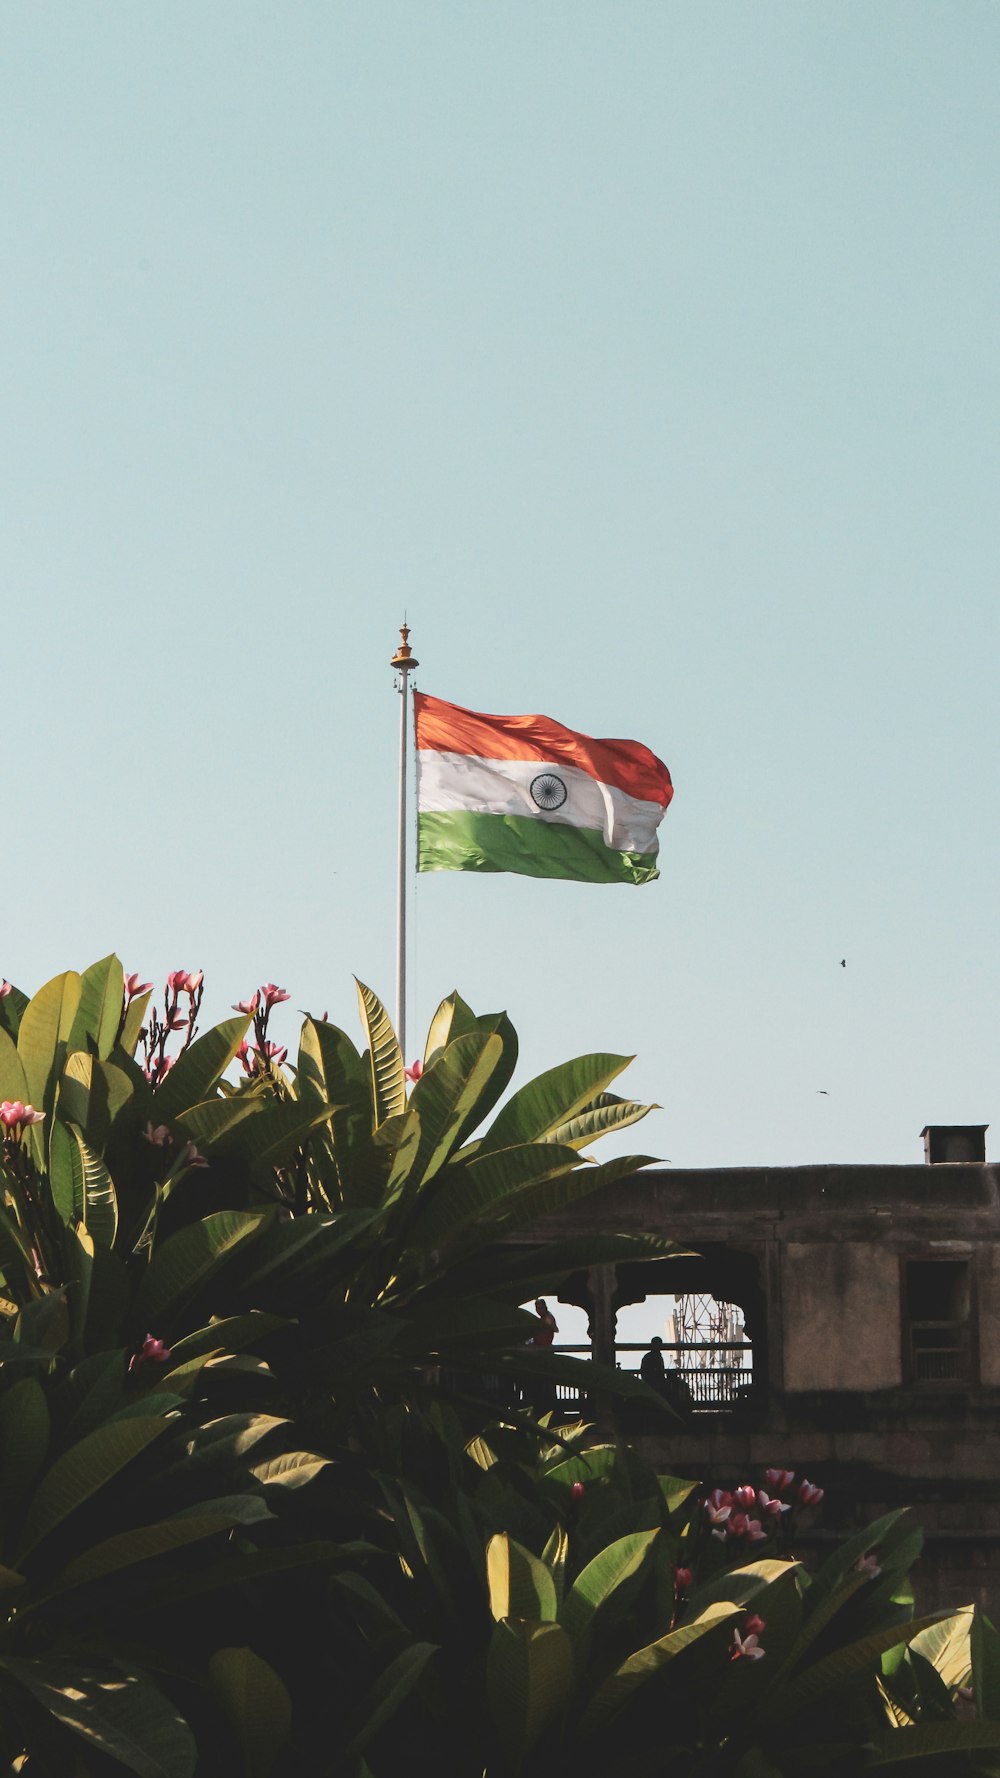 Indian flag waving near building